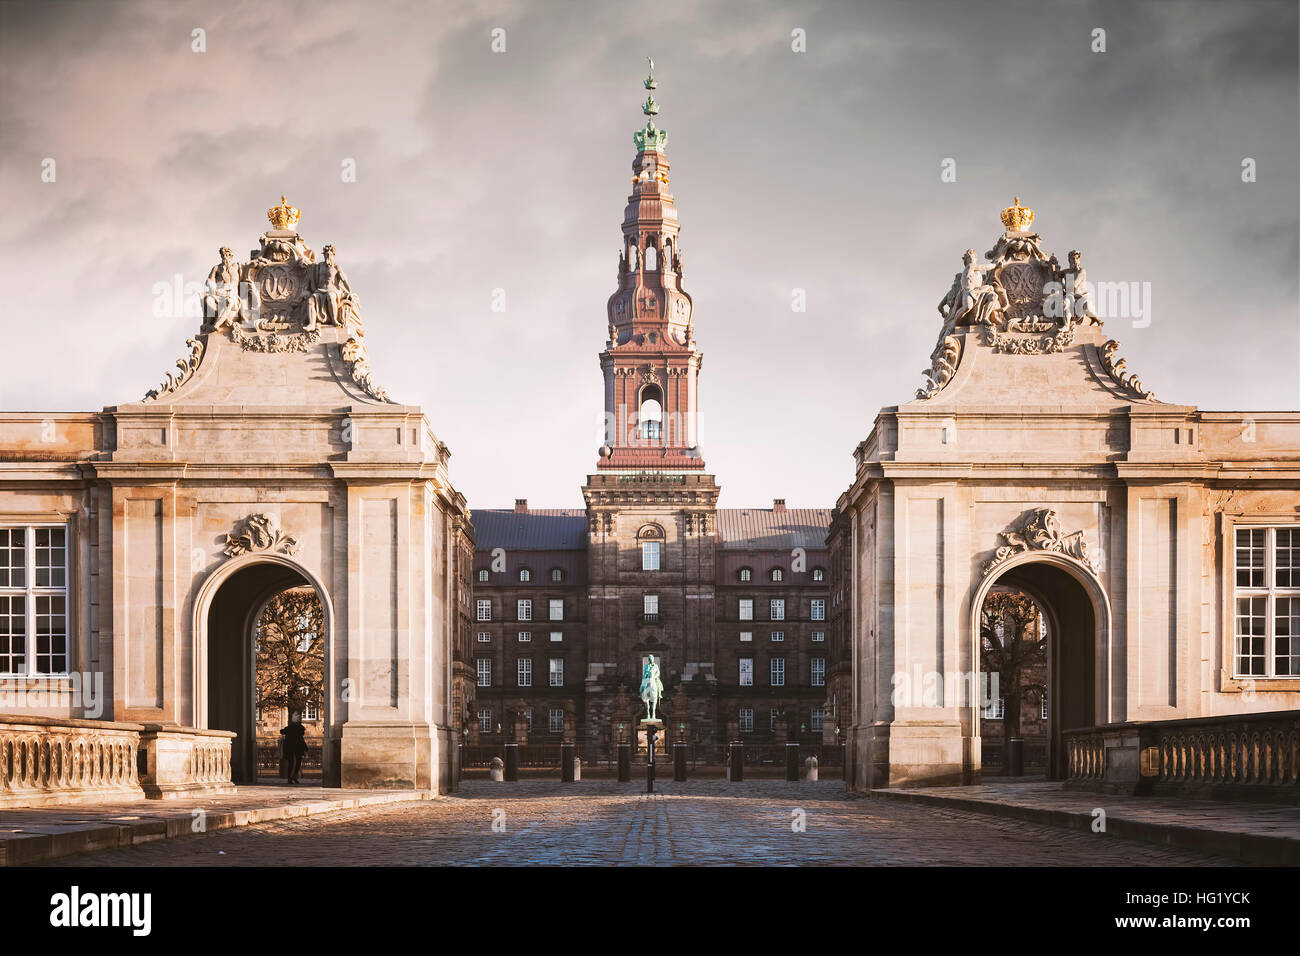 Imagen de la gran entrada al Castillo Christiansborg en Copenhague, Dinamarca. Foto de stock